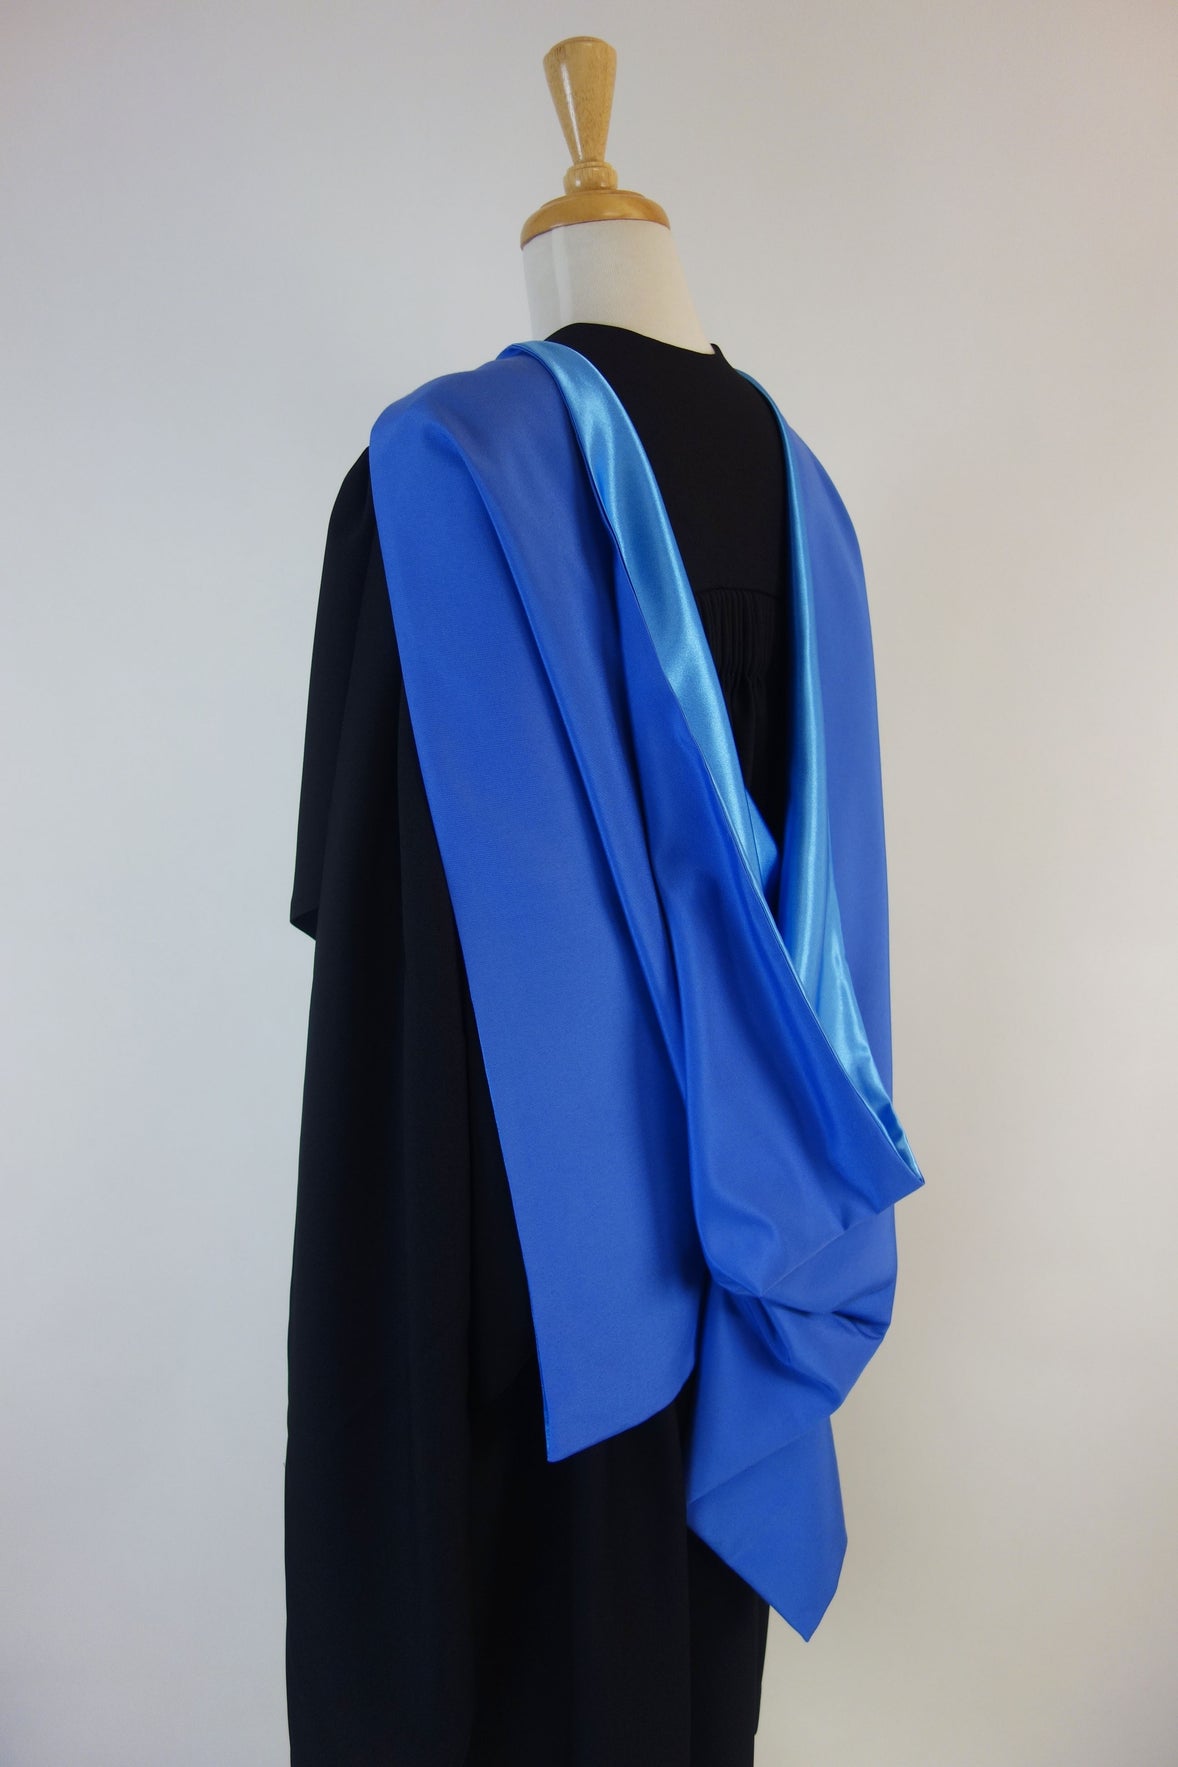 ANU PhD Graduation Gown Set - Gown, Hood and Bonnet